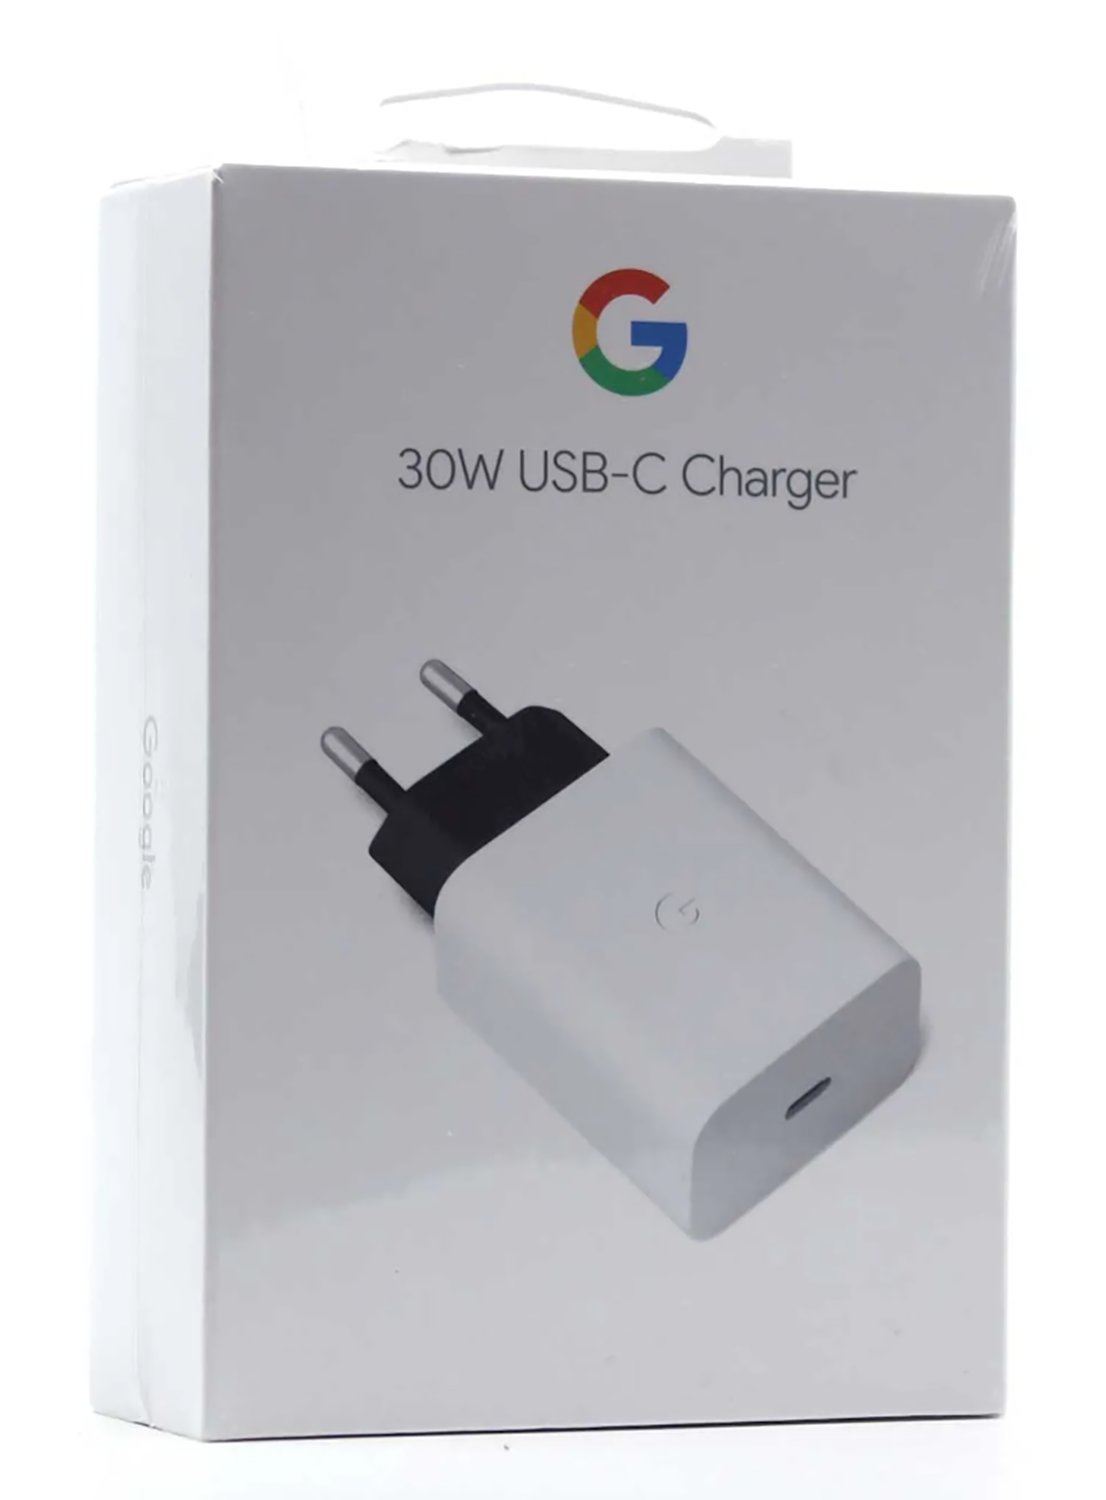 Cетевое зарядное устройство Google, 30W USB-C Charger